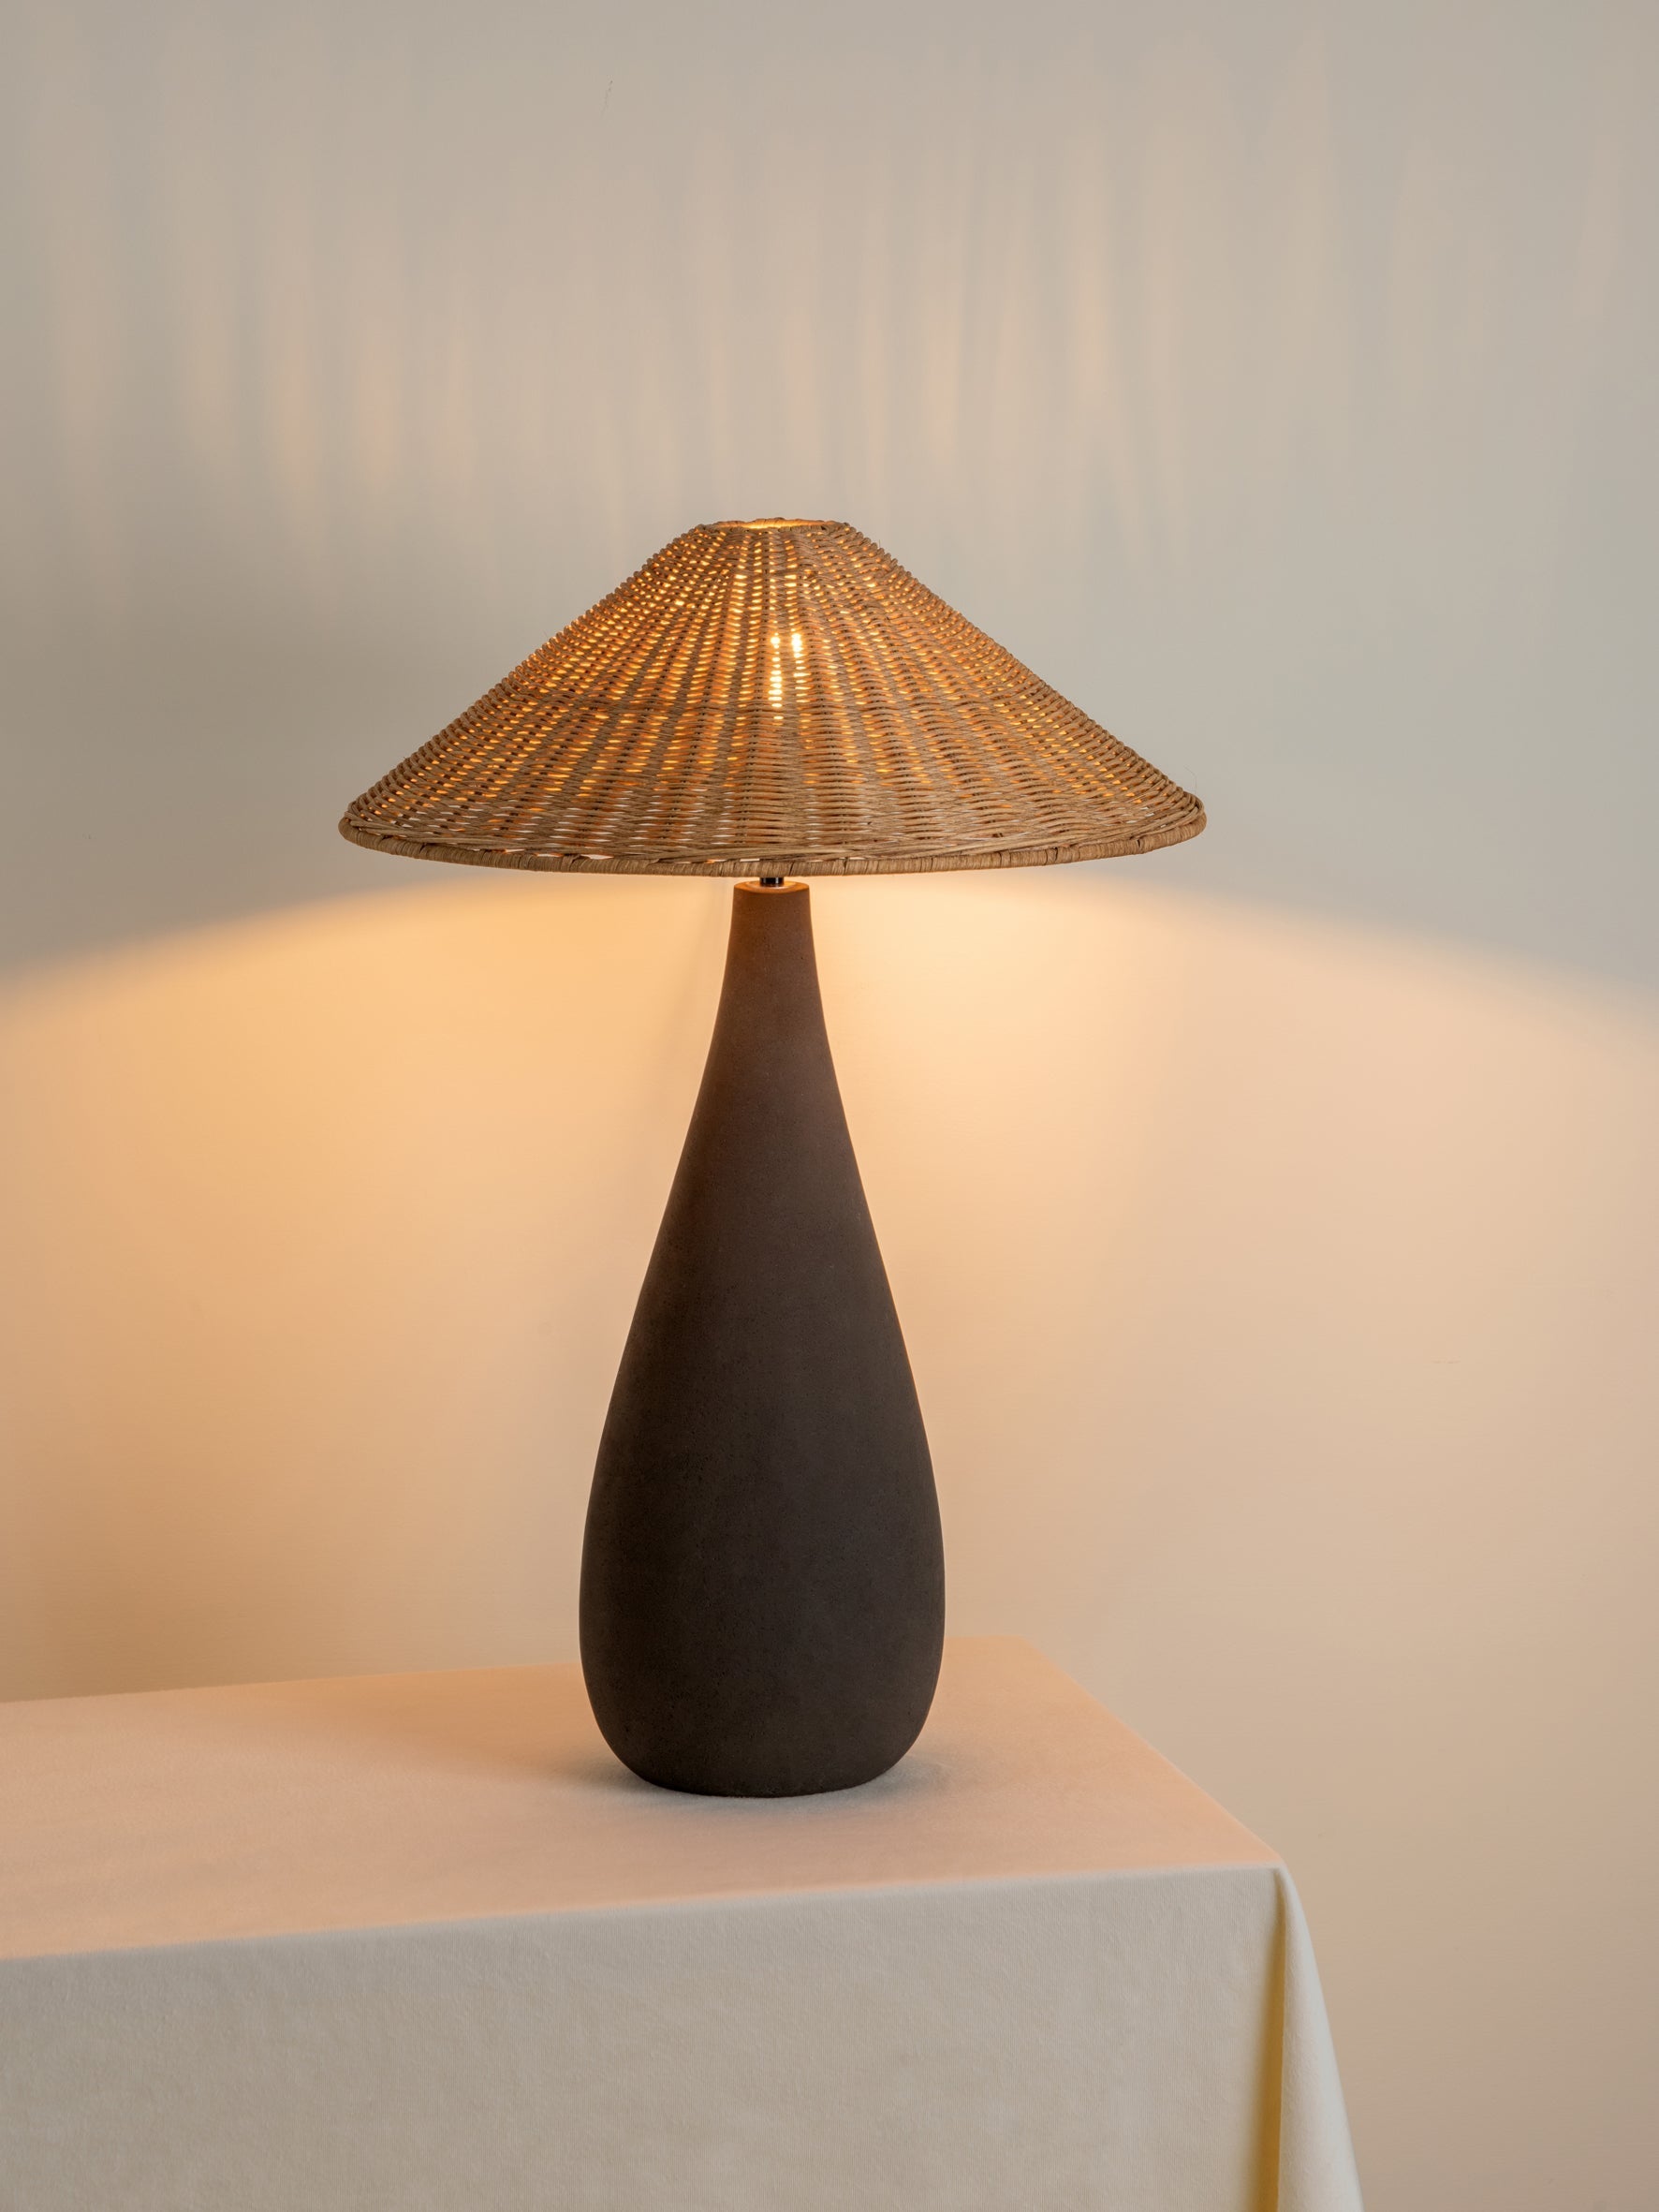 Miata - charcoal concrete and rattan table lamp | Table Lamp | Lights & Lamps Inc | Modern Affordable Designer Lighting | USA